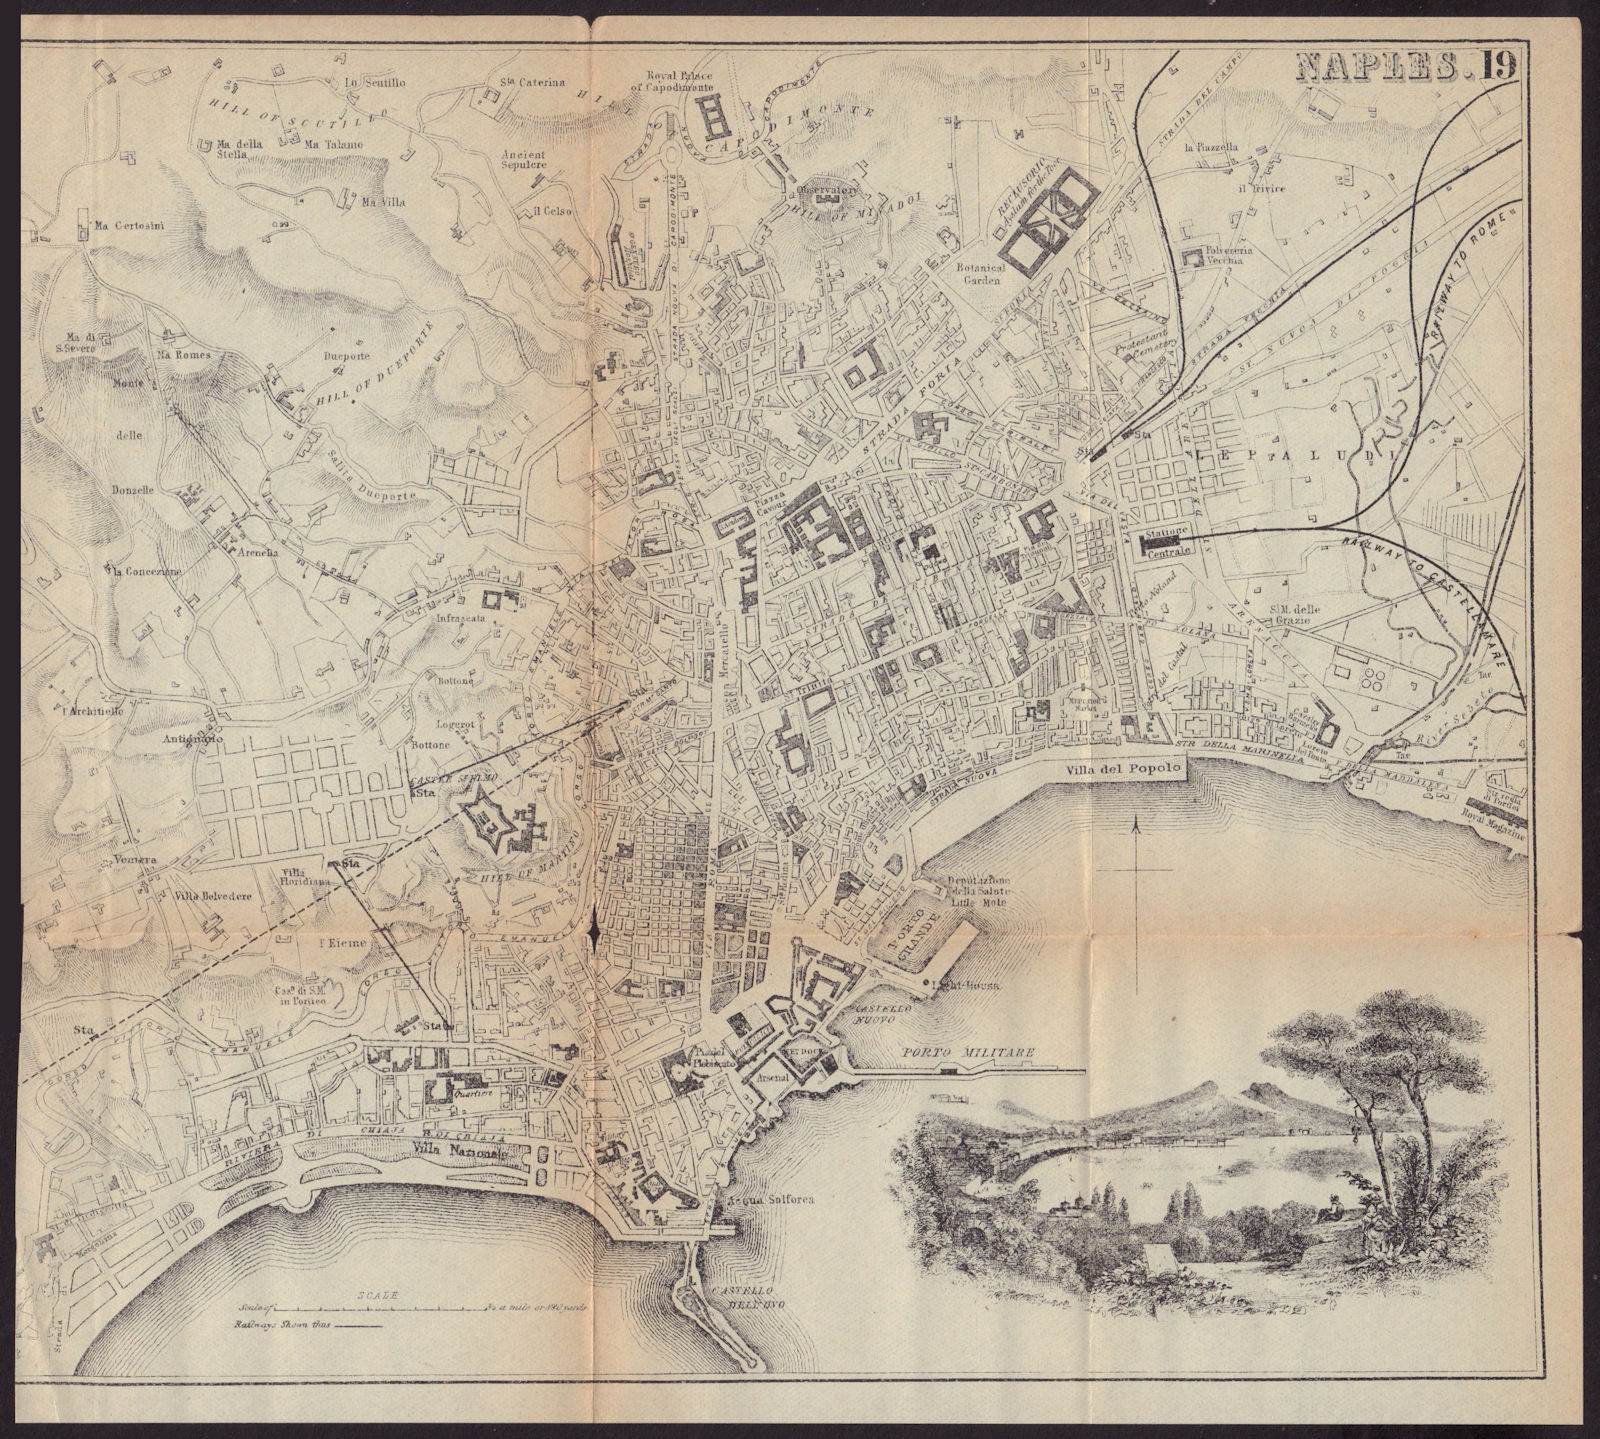 NAPLES NAPOLI antique town plan city map. Italy. BRADSHAW c1898 old